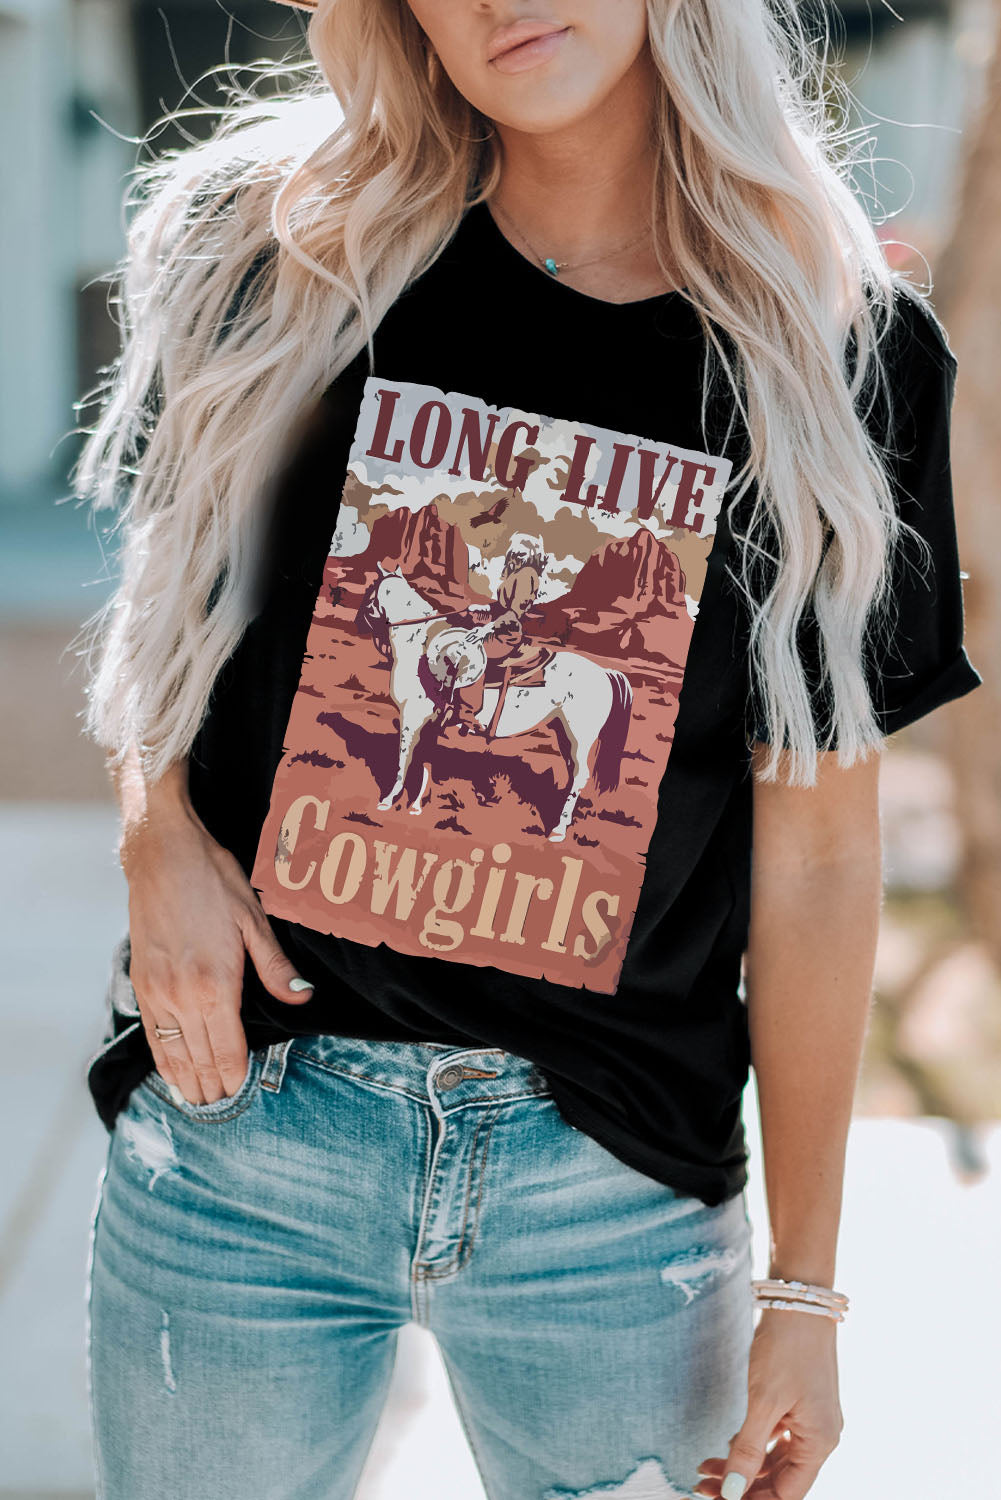 Black LONG LIVE Cowgirls Graphic Print T Shirt